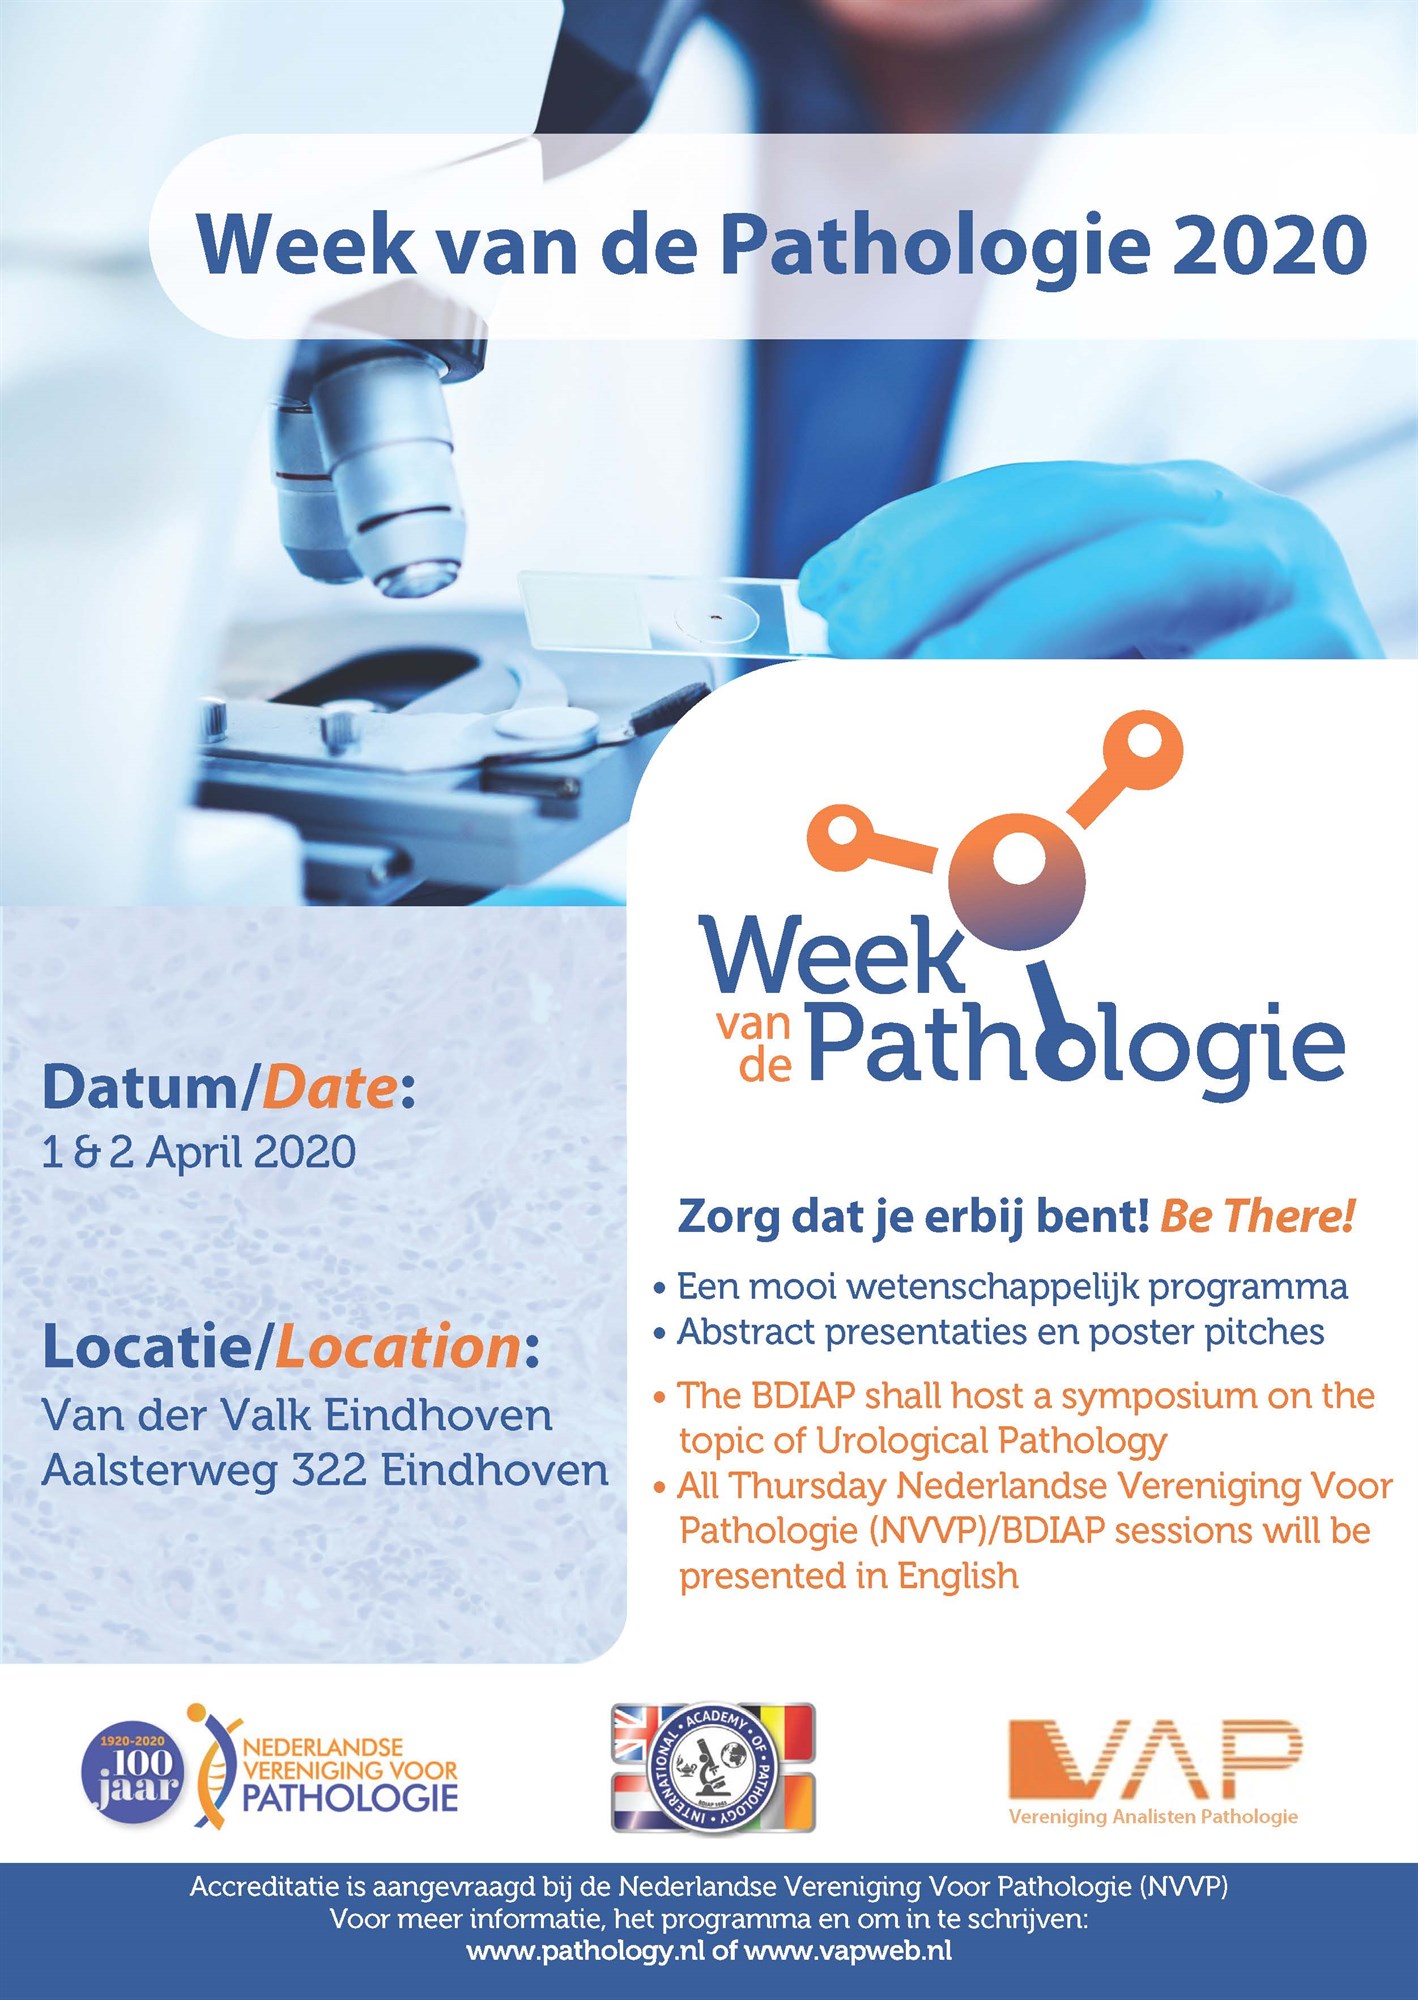 BDIAP to host symposium at Annual Dutch Pathology Meeting 2020 image